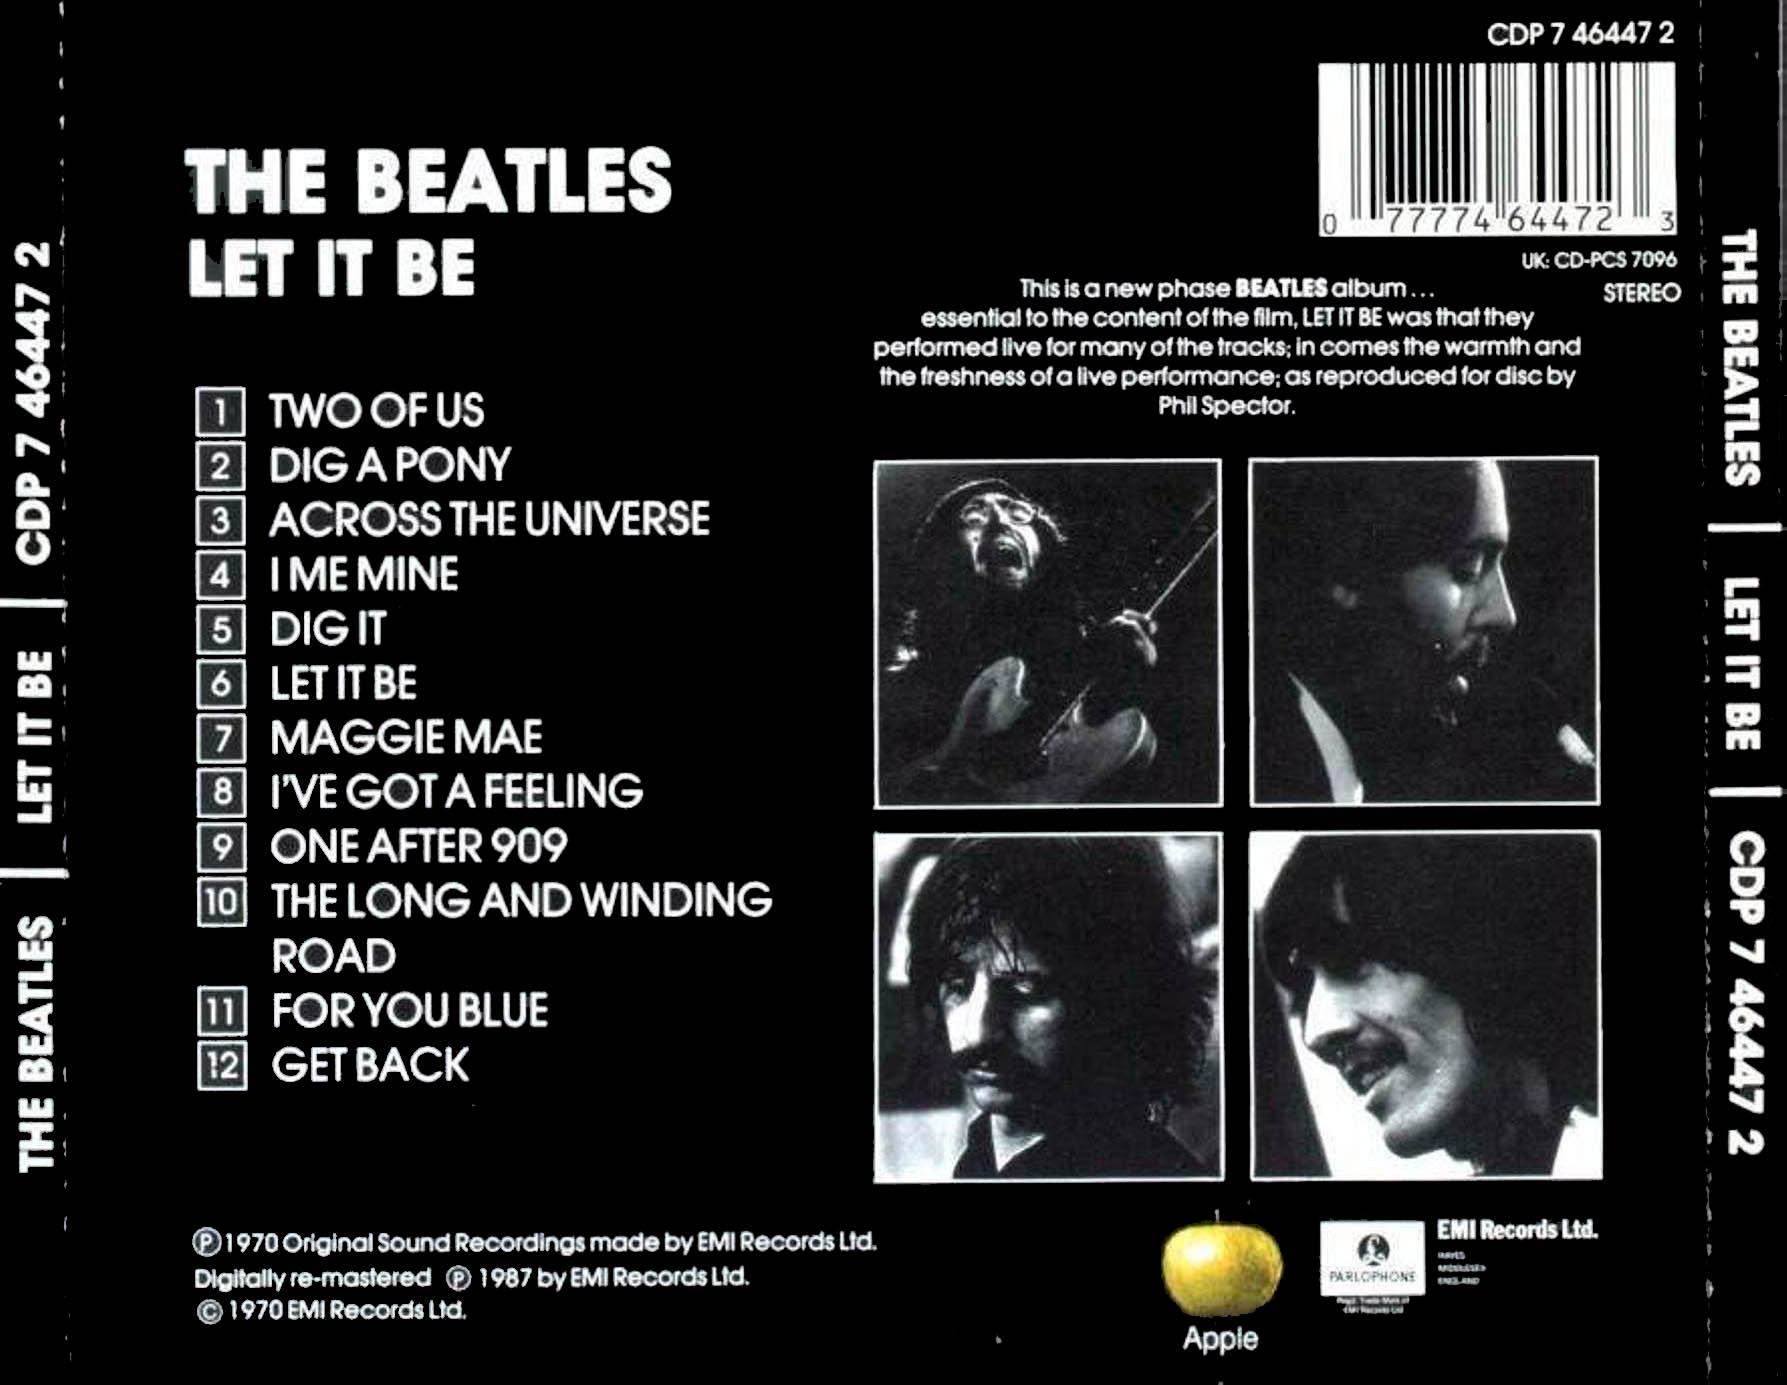 Лет ит би слушать. The Beatles Let it be 1970 CD. Let it be обложка альбома. The Beatles - Let it be. Битлз альбомы.